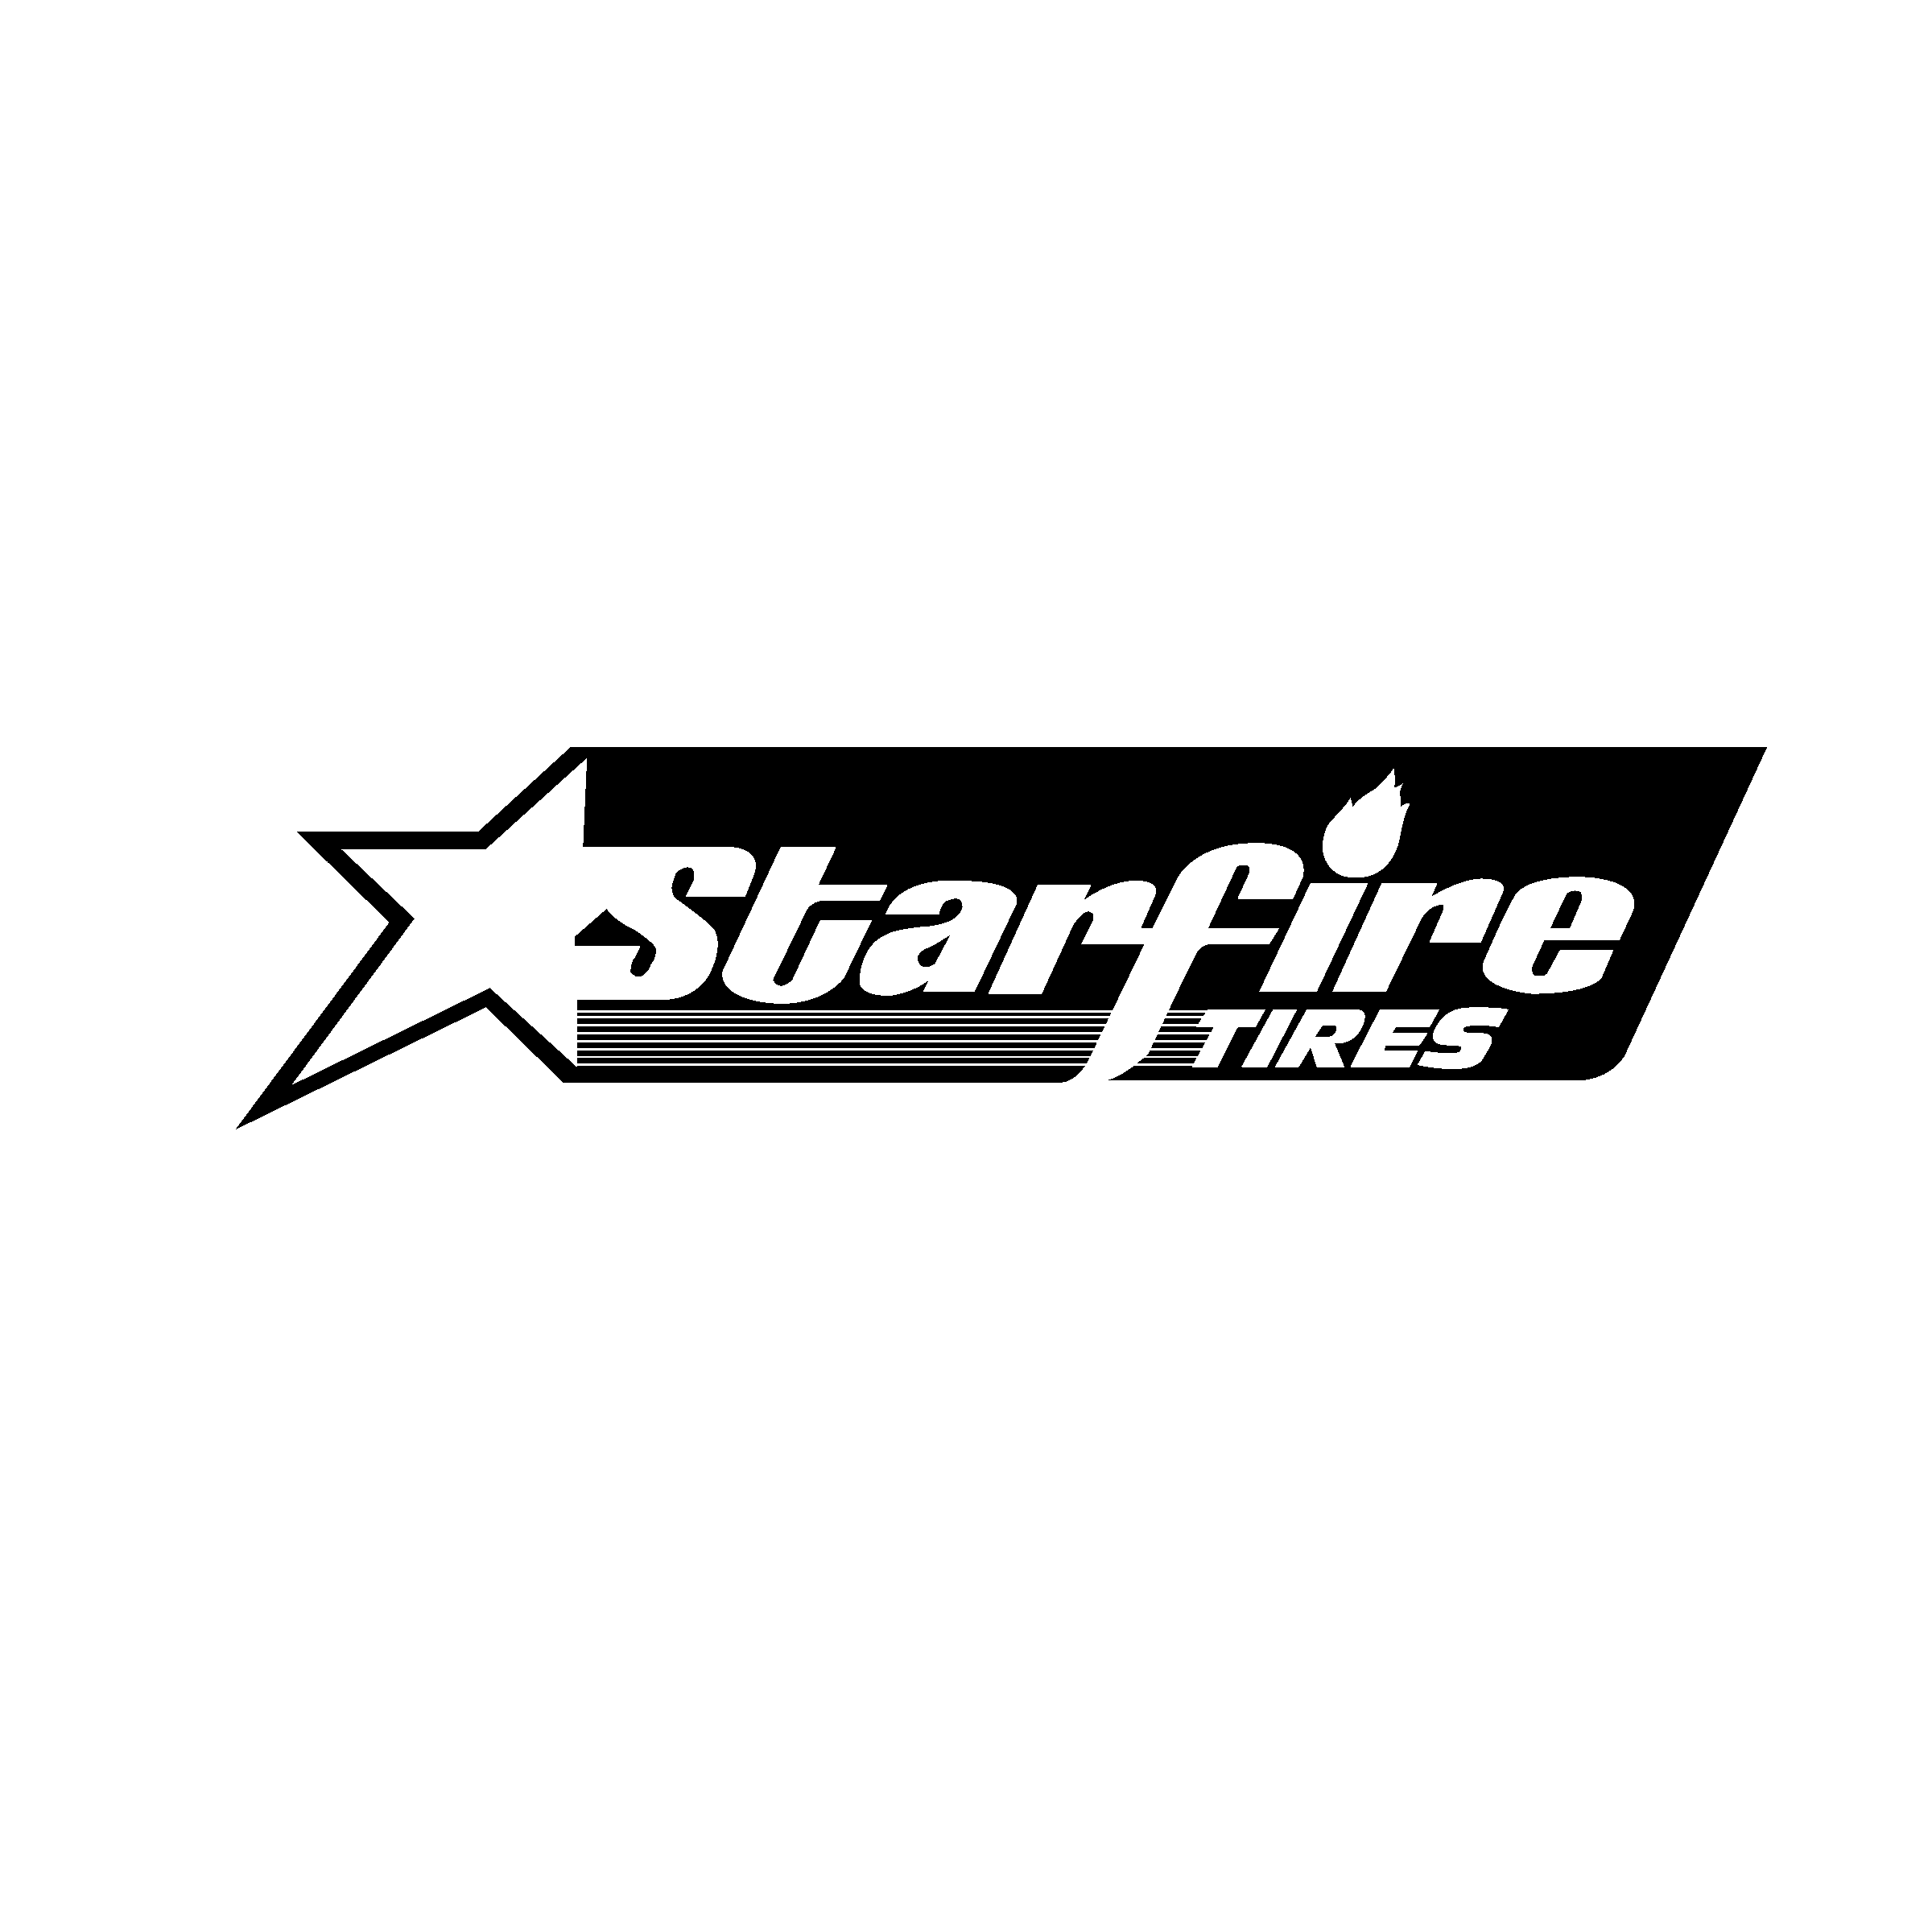 Superama Logo - Starfire Tires Logo PNG Transparent & SVG Vector - Freebie Supply